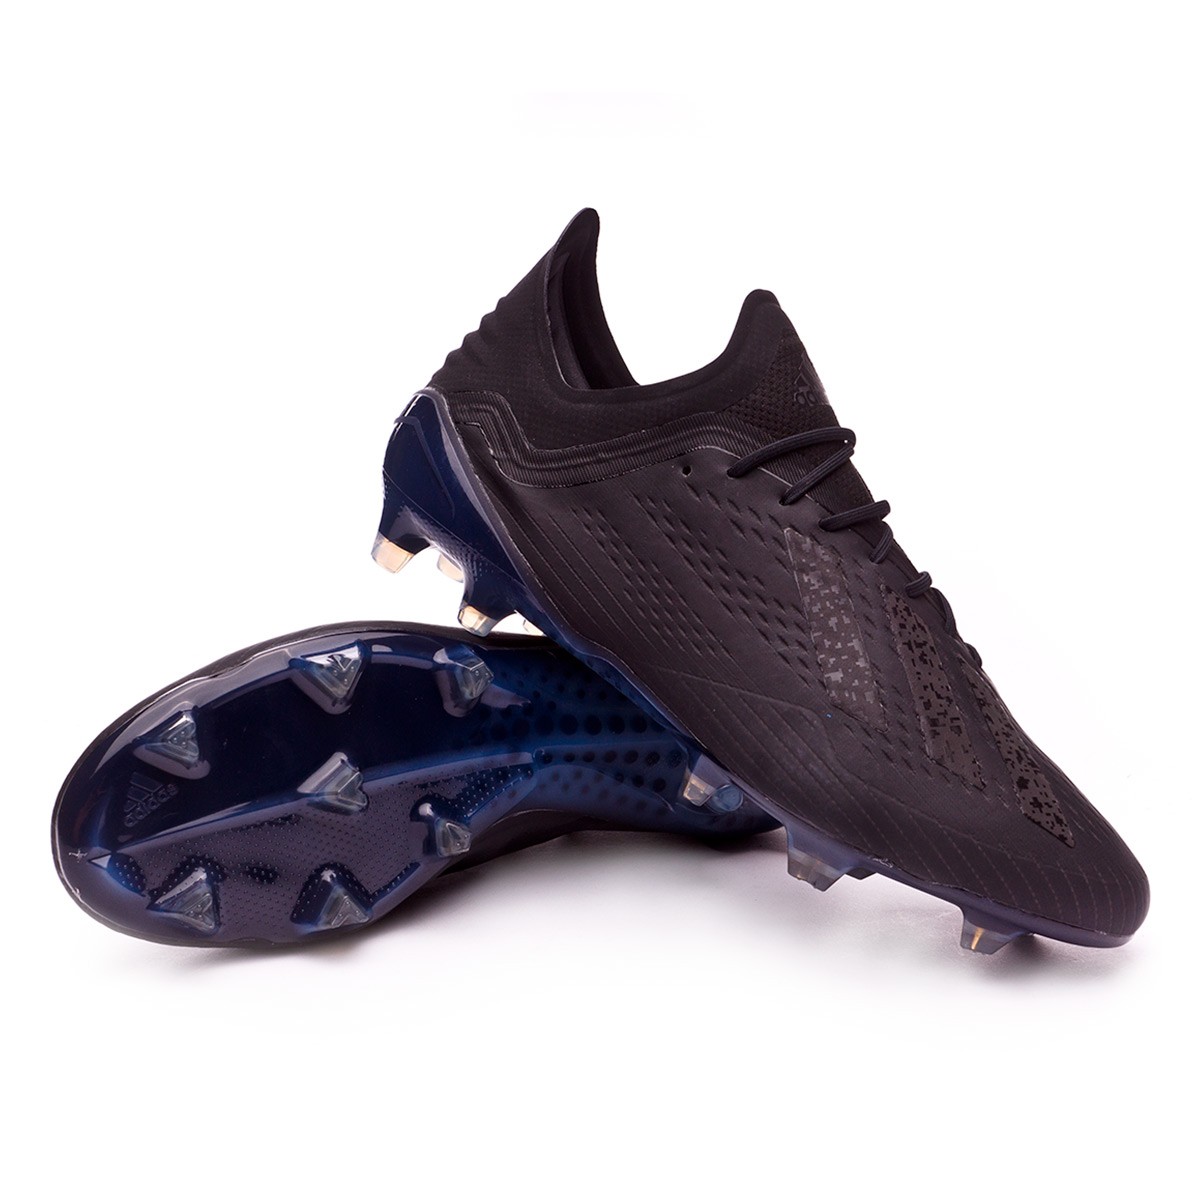 Football Boots adidas X 18.1 FG Core 